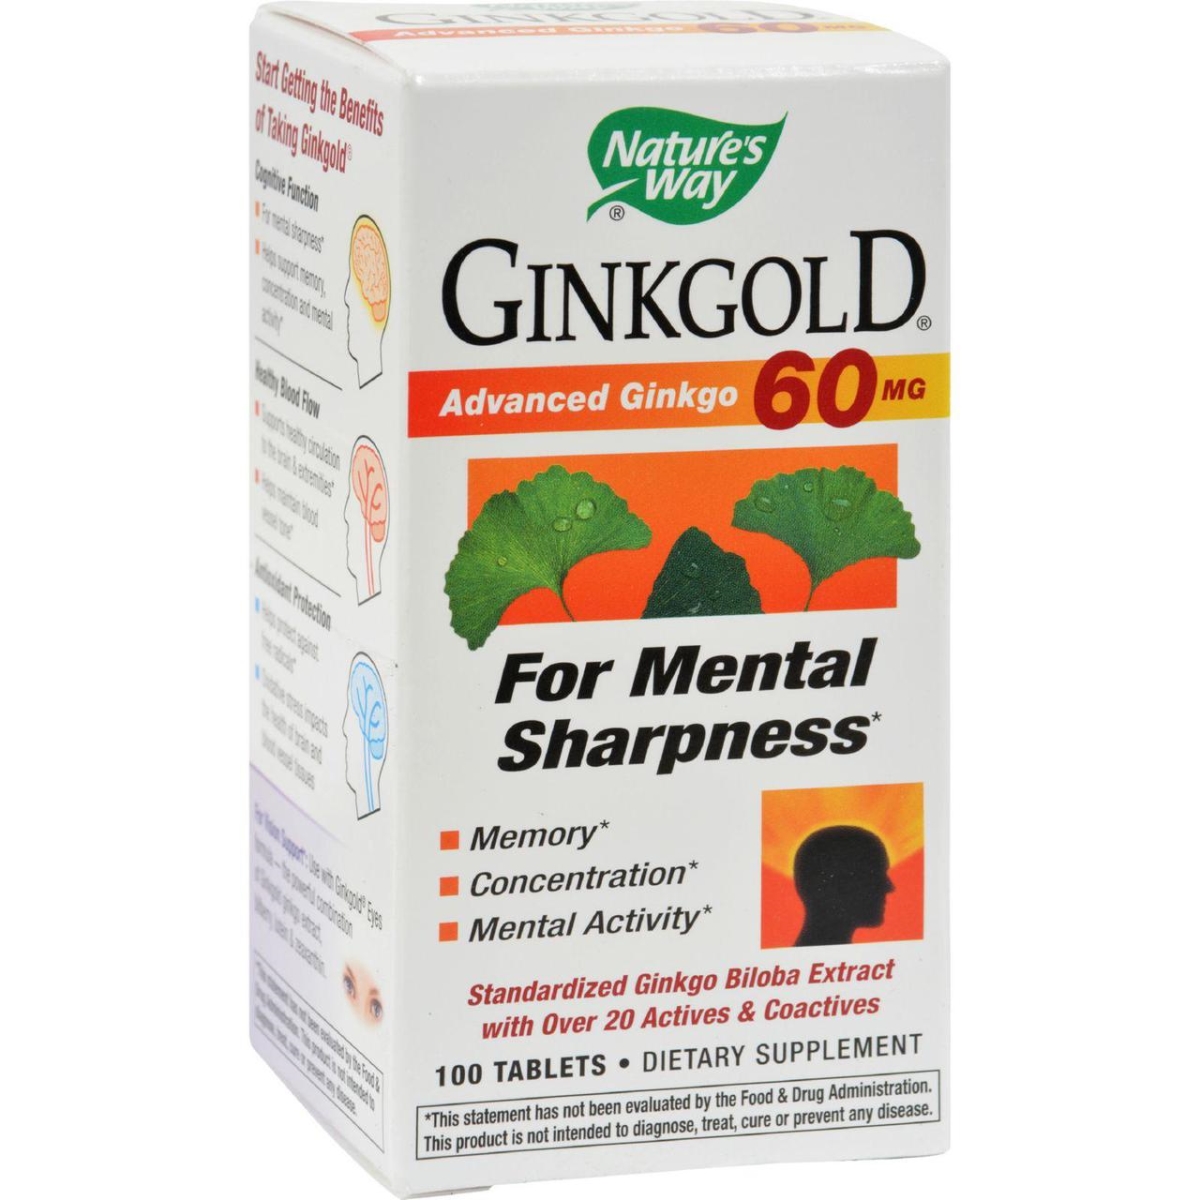 Hg0435727 Ginkgold - 100 Tablets